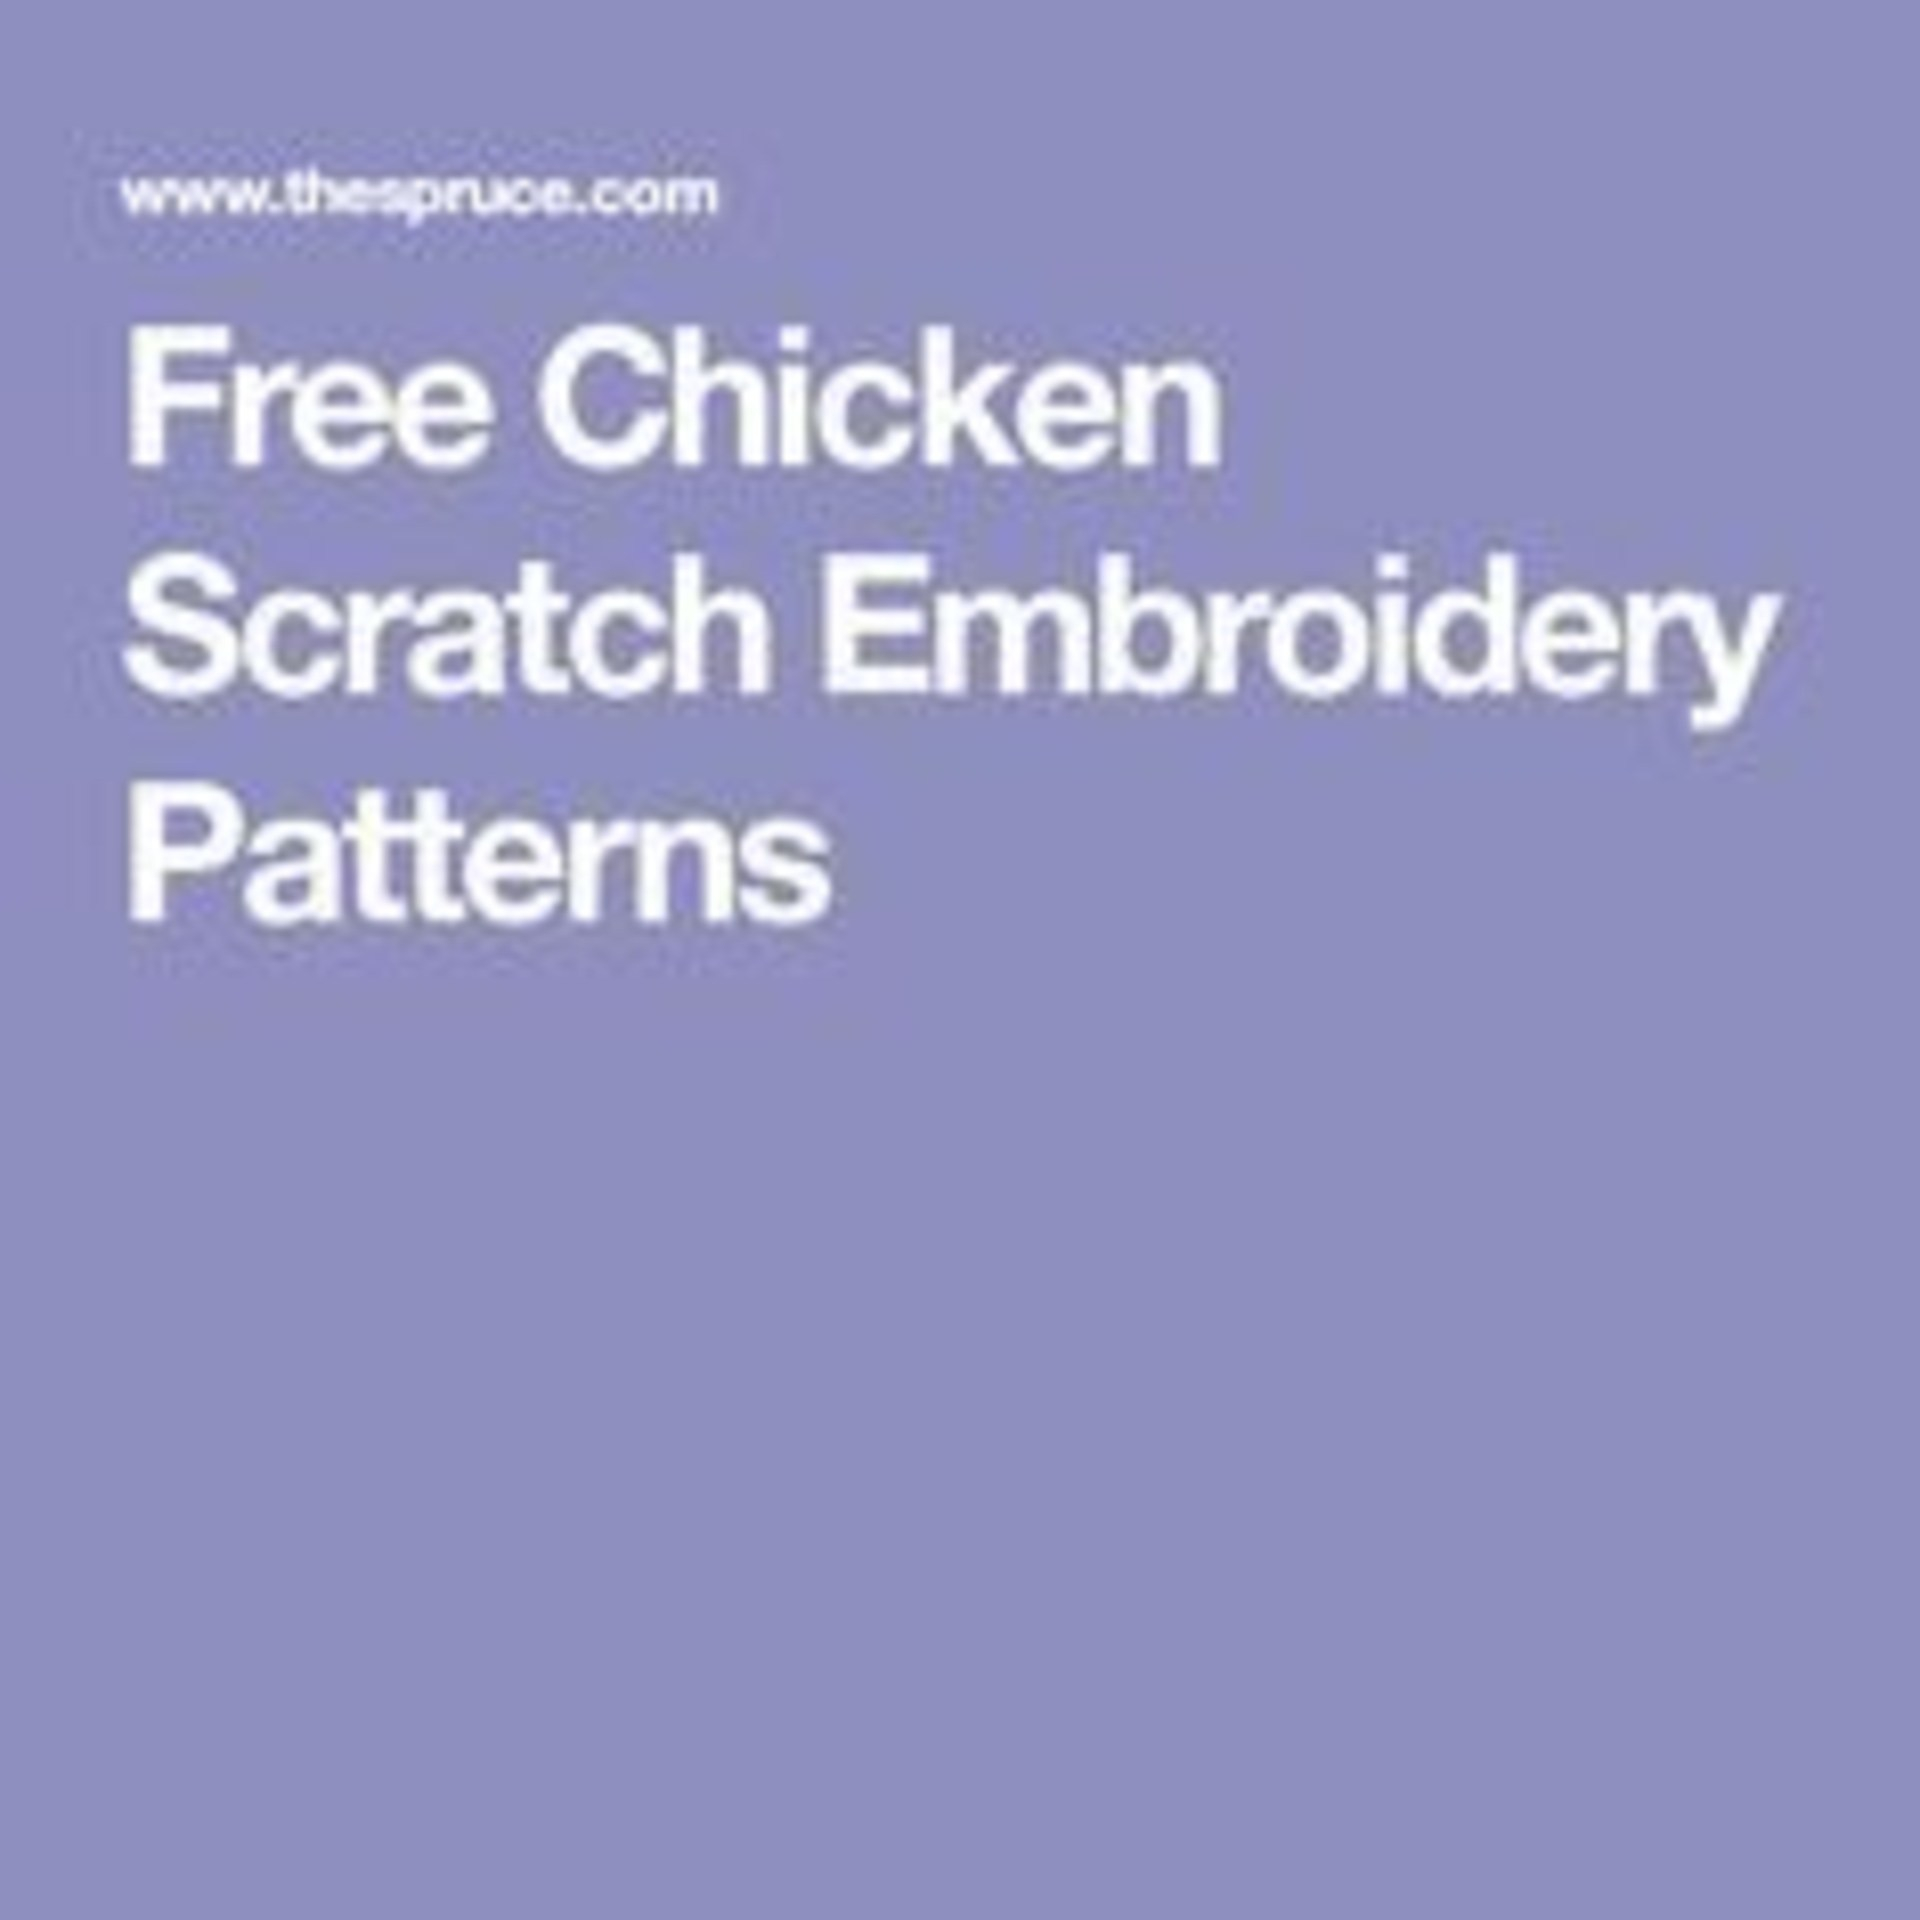 Chicken Embroidery Patterns Free Get 36 Chicken Scratch Patterns Hd Wallpapers Pictpress